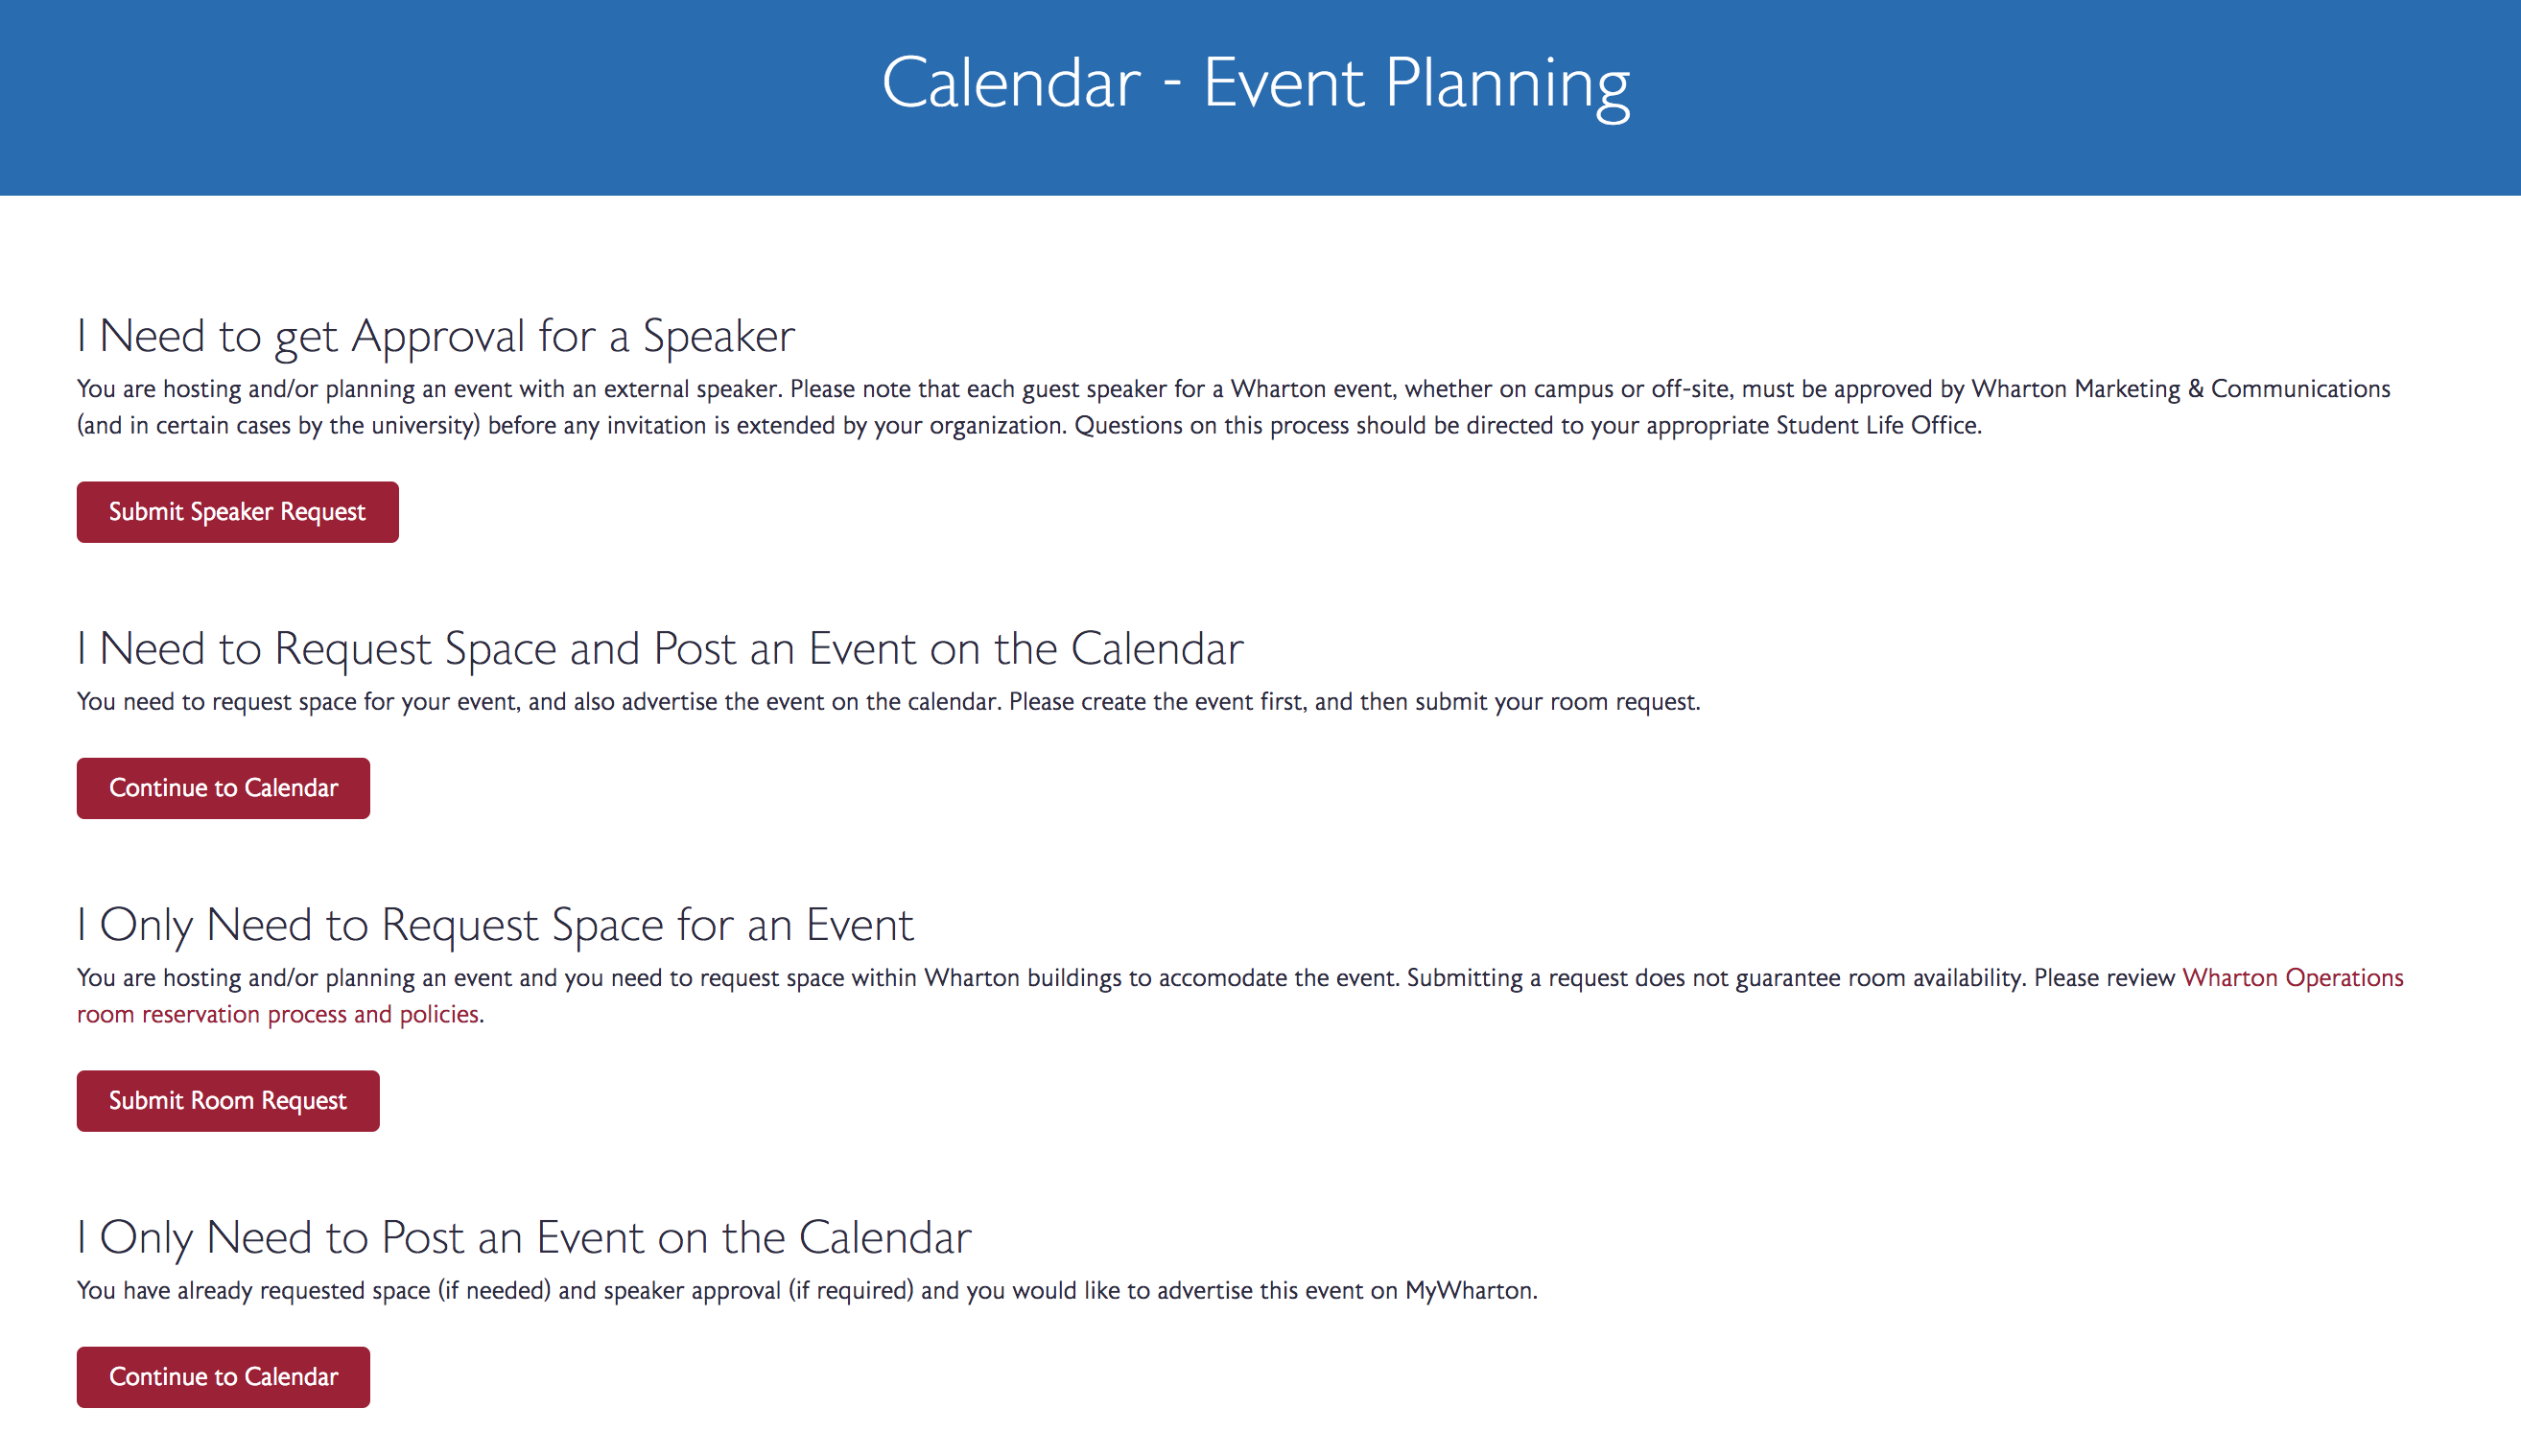 MyWharton Calendar Event Planning